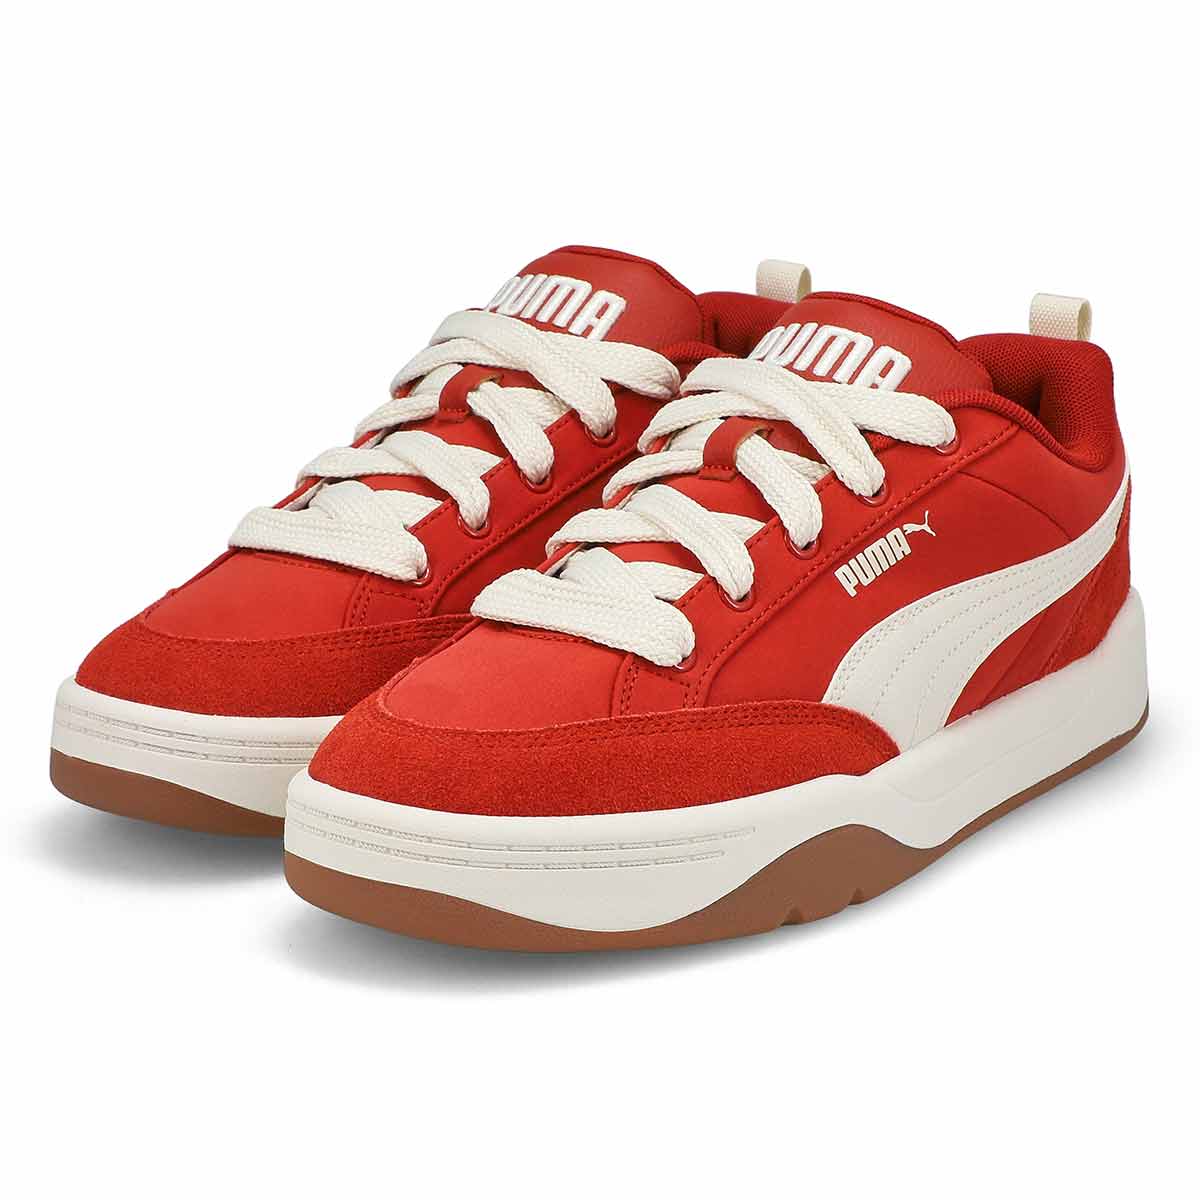 Men's Park Lifestyle Street Lace Up Sneaker - Mars Red/Vapor Gray